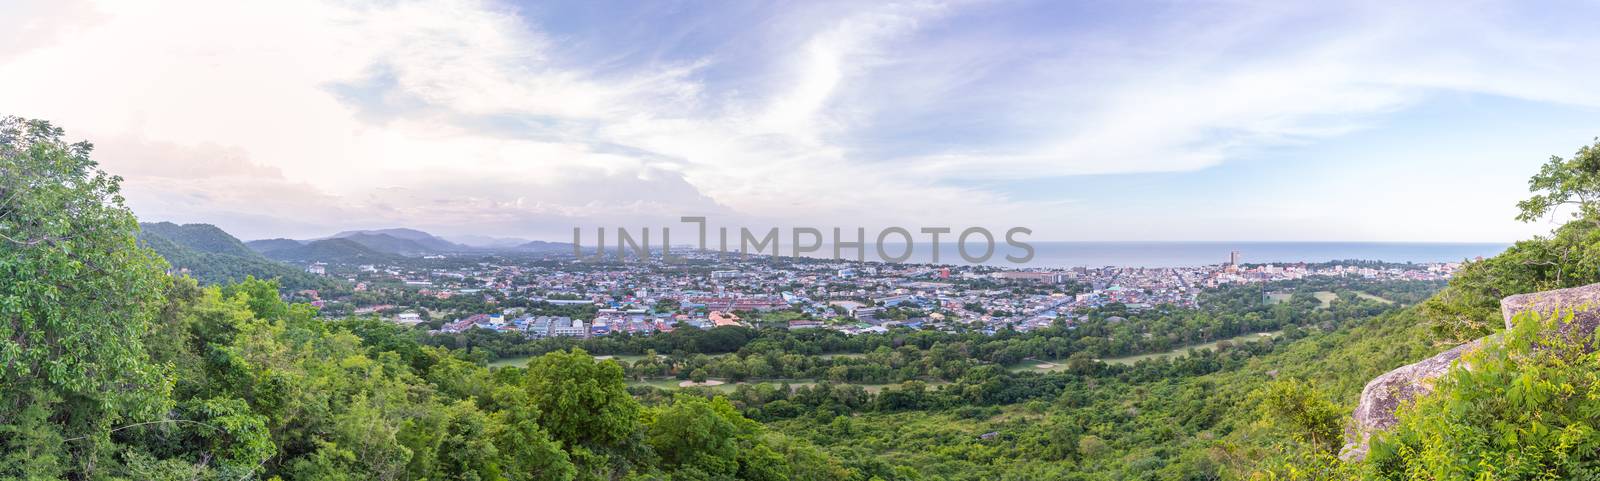 Panorama cityscape of Hua Hin Prachuap Khiri Khan by PongMoji